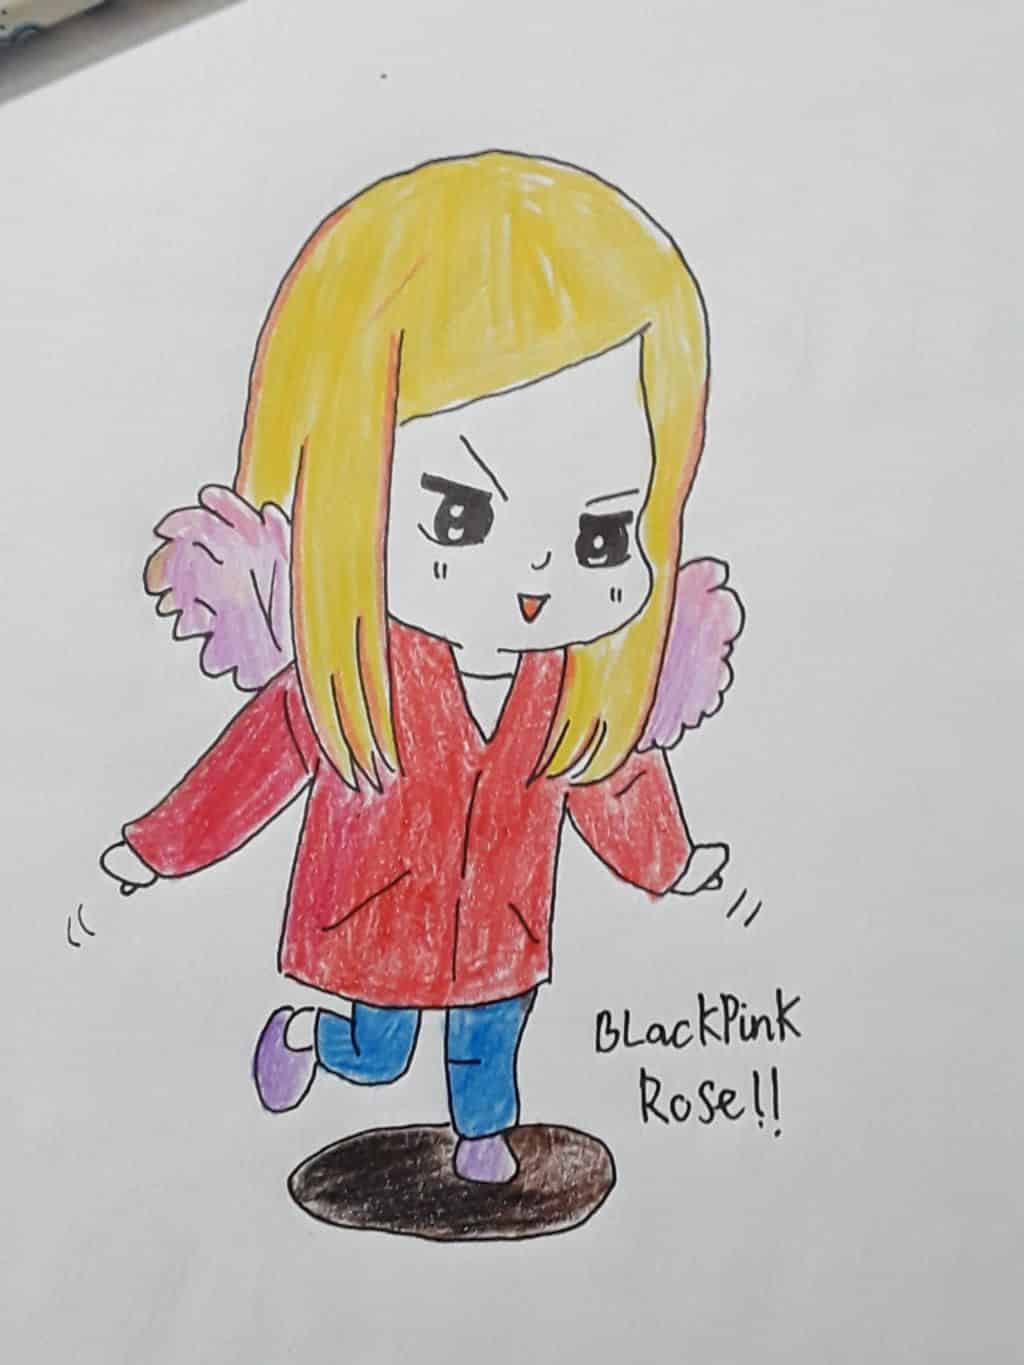 Tranh Rose Blackpink Chibi cute nhất